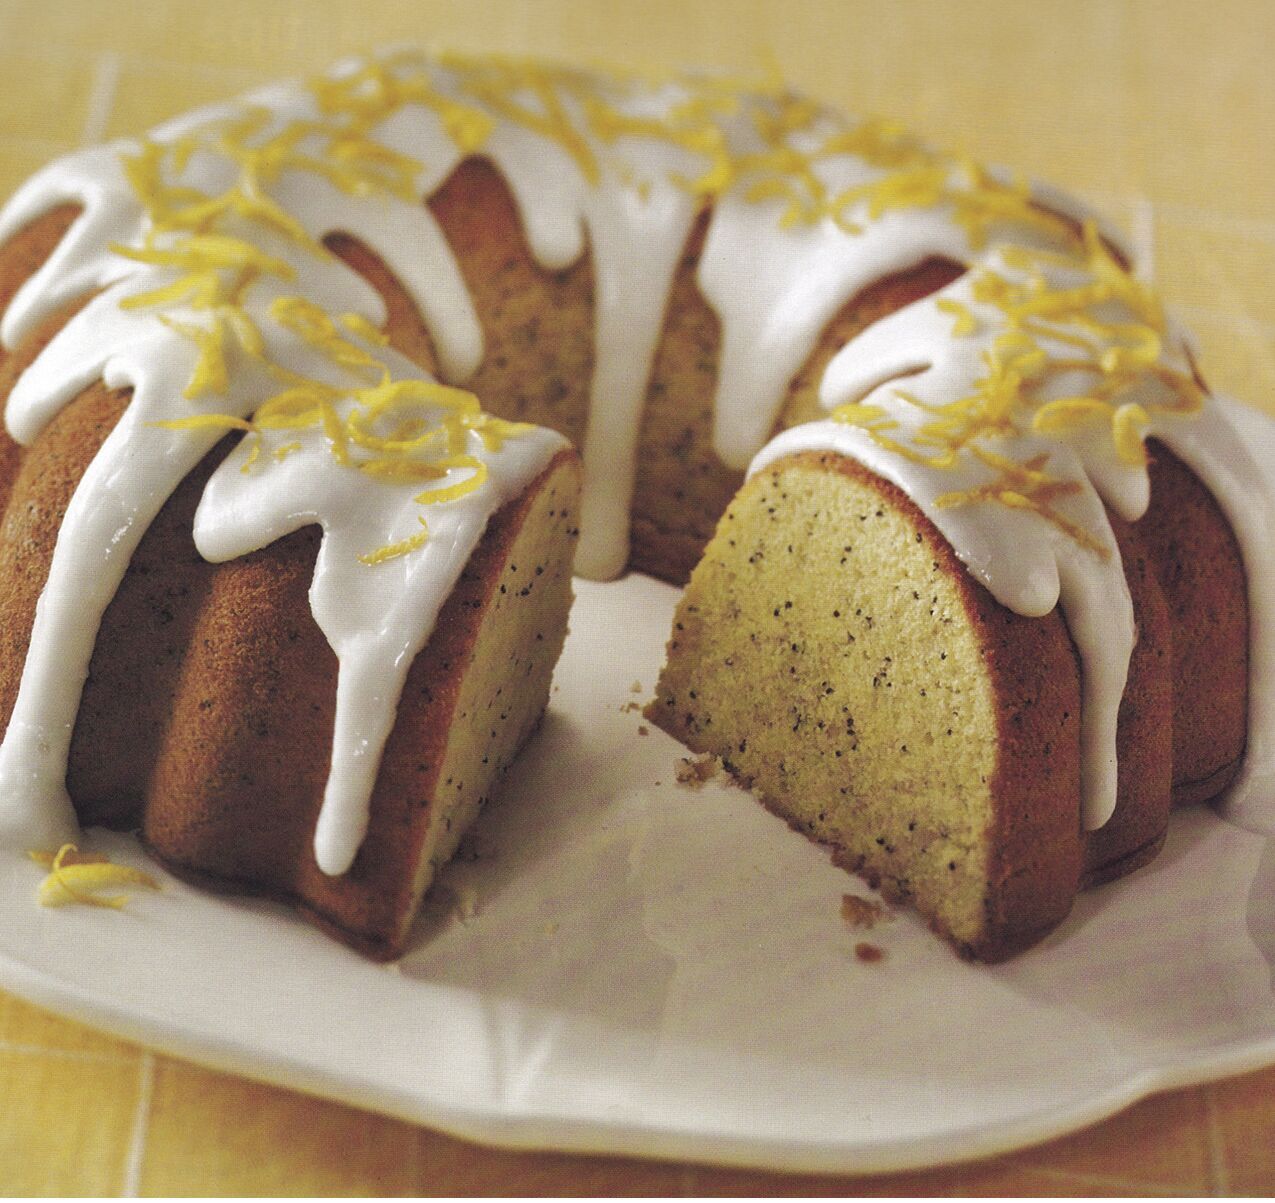 Lemon pound cake brings sunshine to the table Food and Recipes jacksonprogress-argus